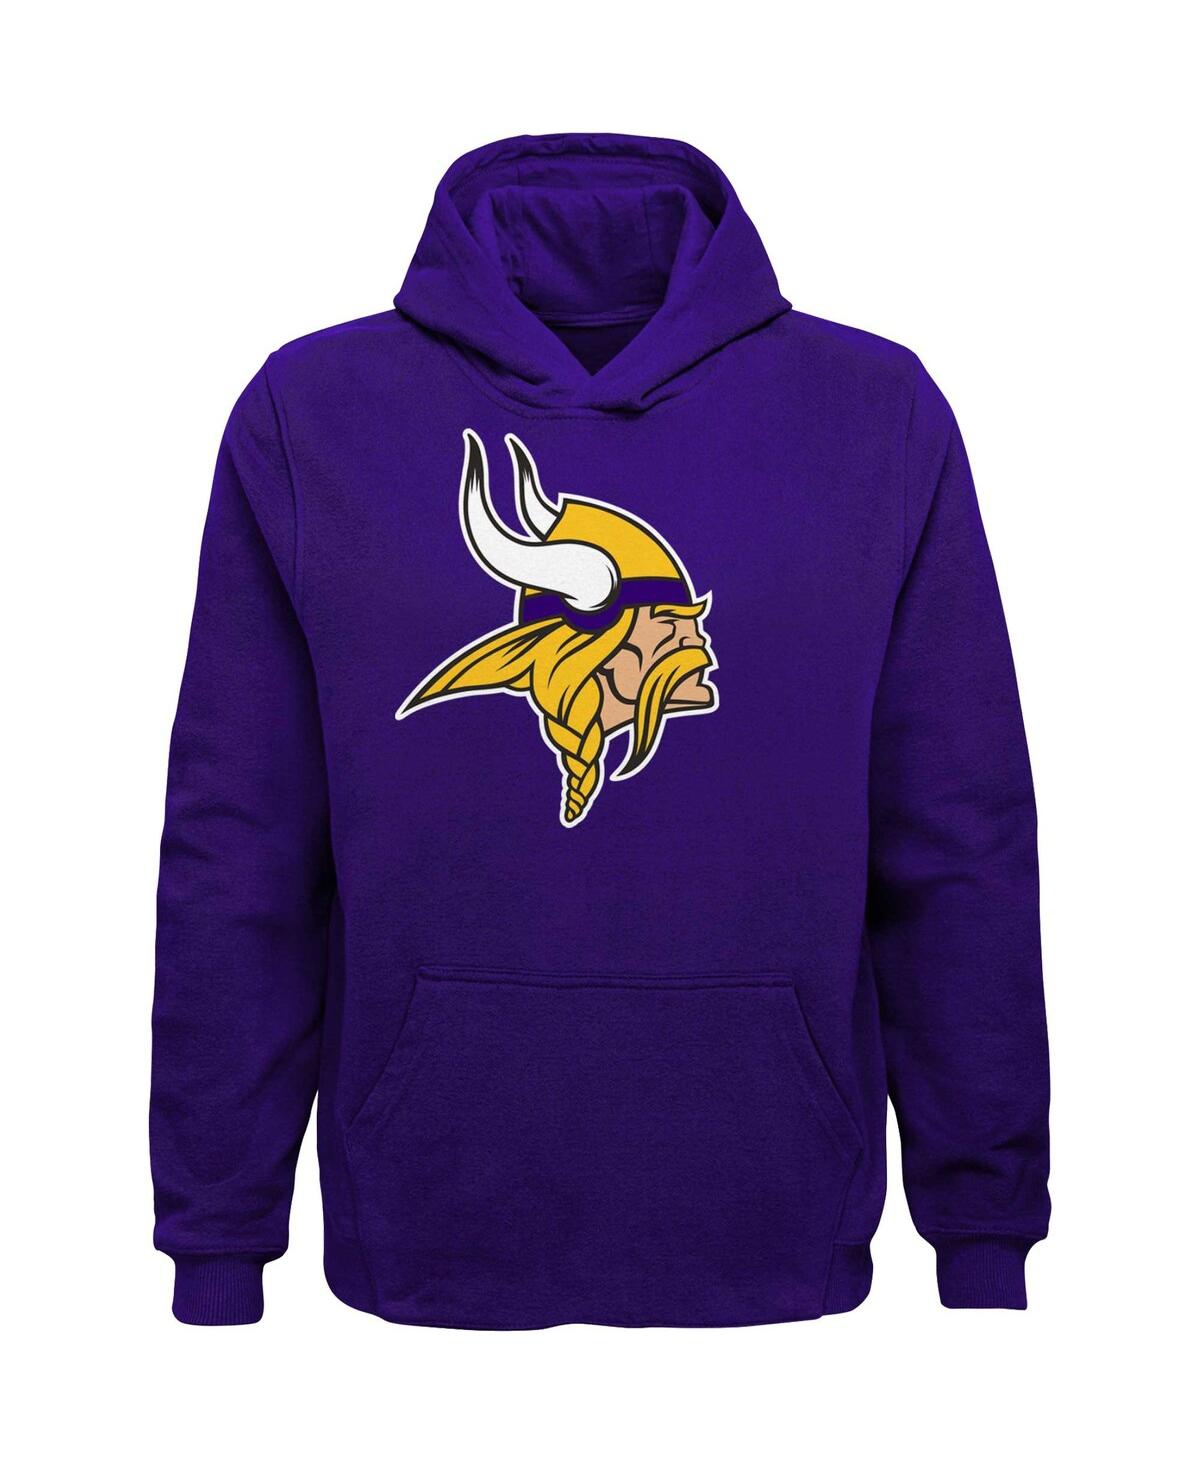 Shop Outerstuff Big Boys Purple Minnesota Vikings Team Logo Pullover Hoodie